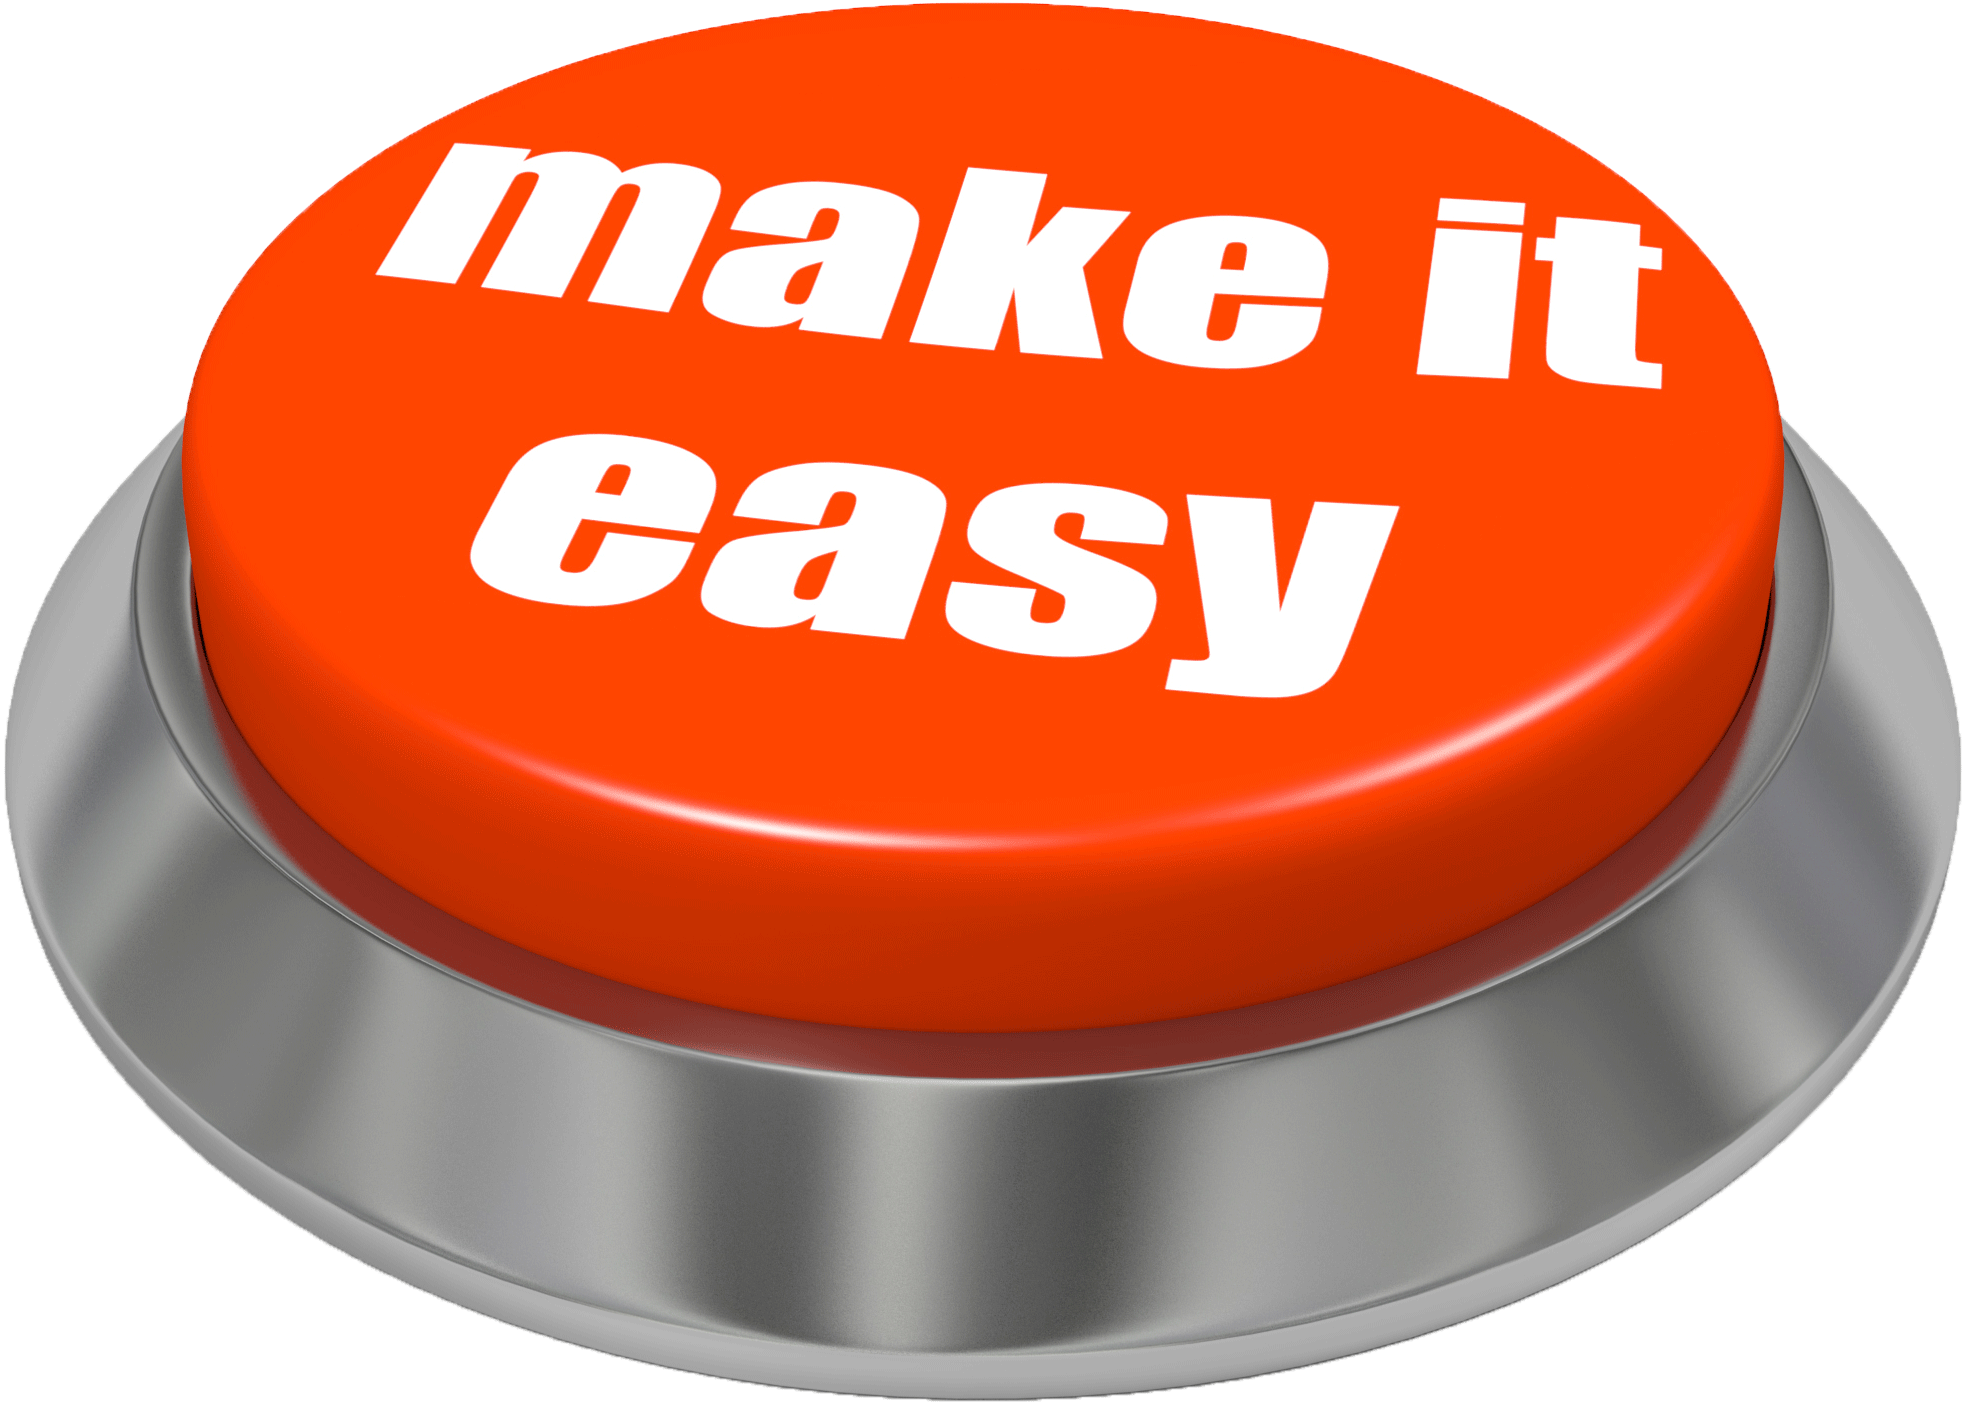 Make it easy. Кнопка that was easy. Эффект нажатия кнопки. Нажатая кнопка Push. Make it easy 1